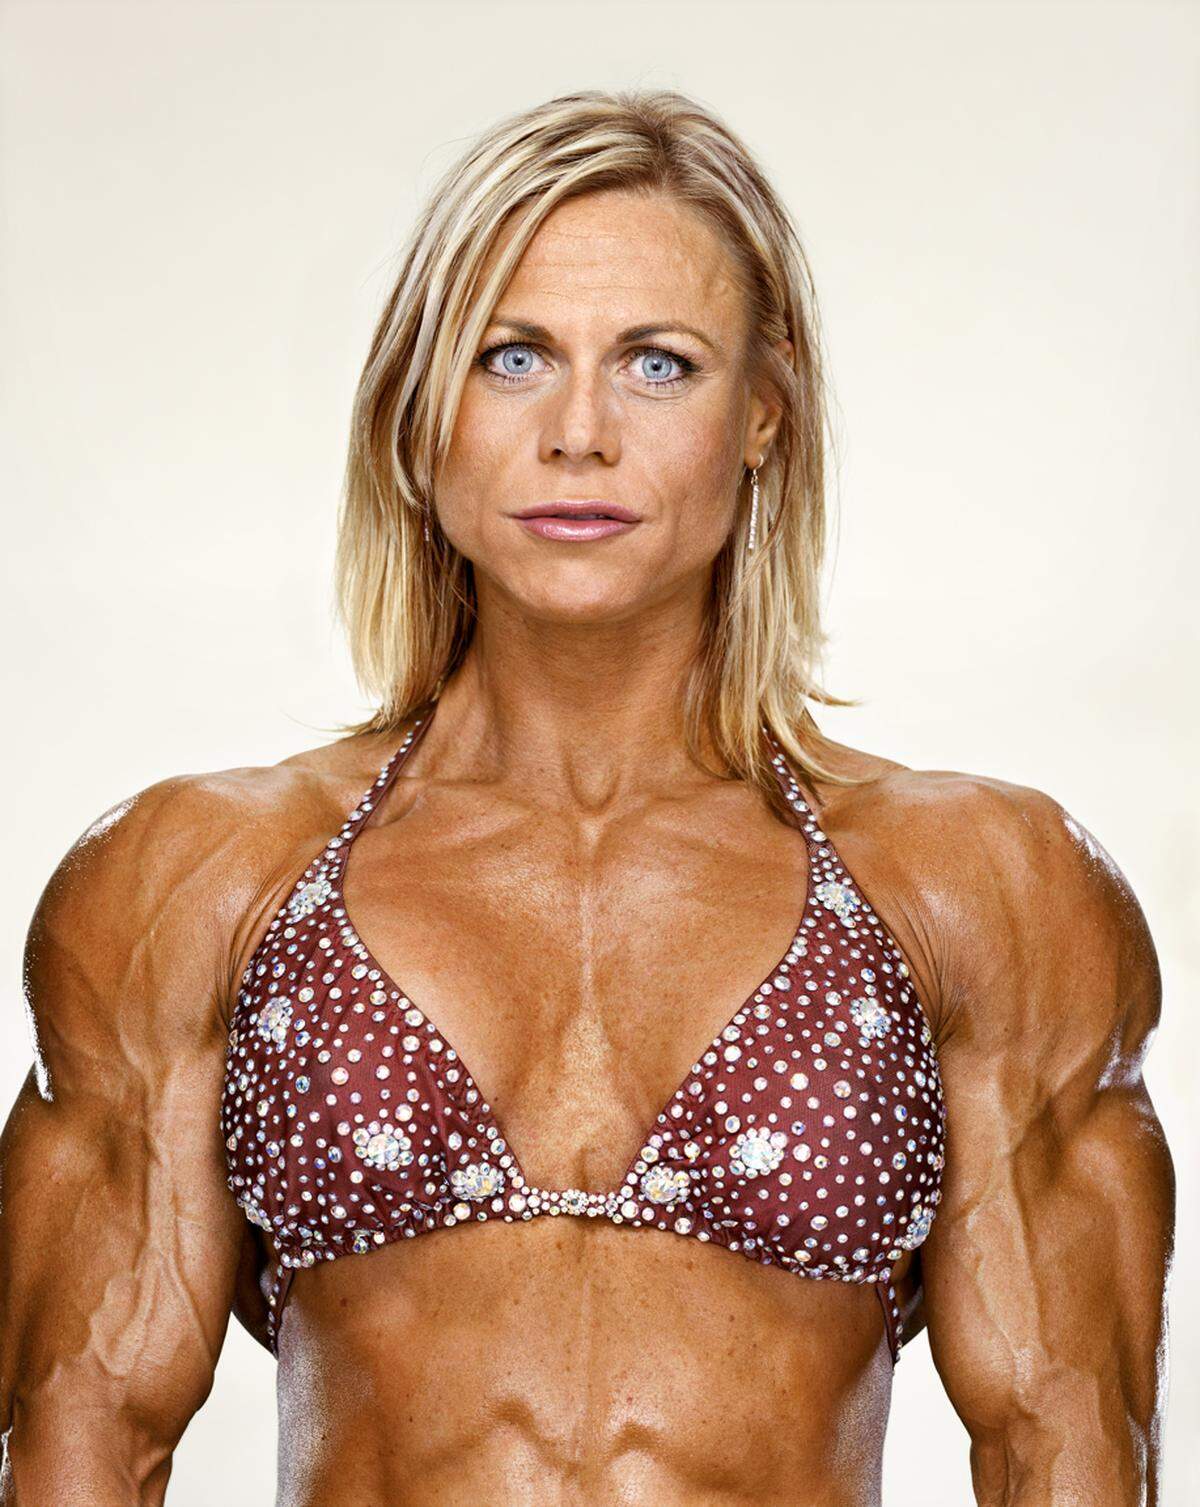 Bodybuilderin Christine Roth